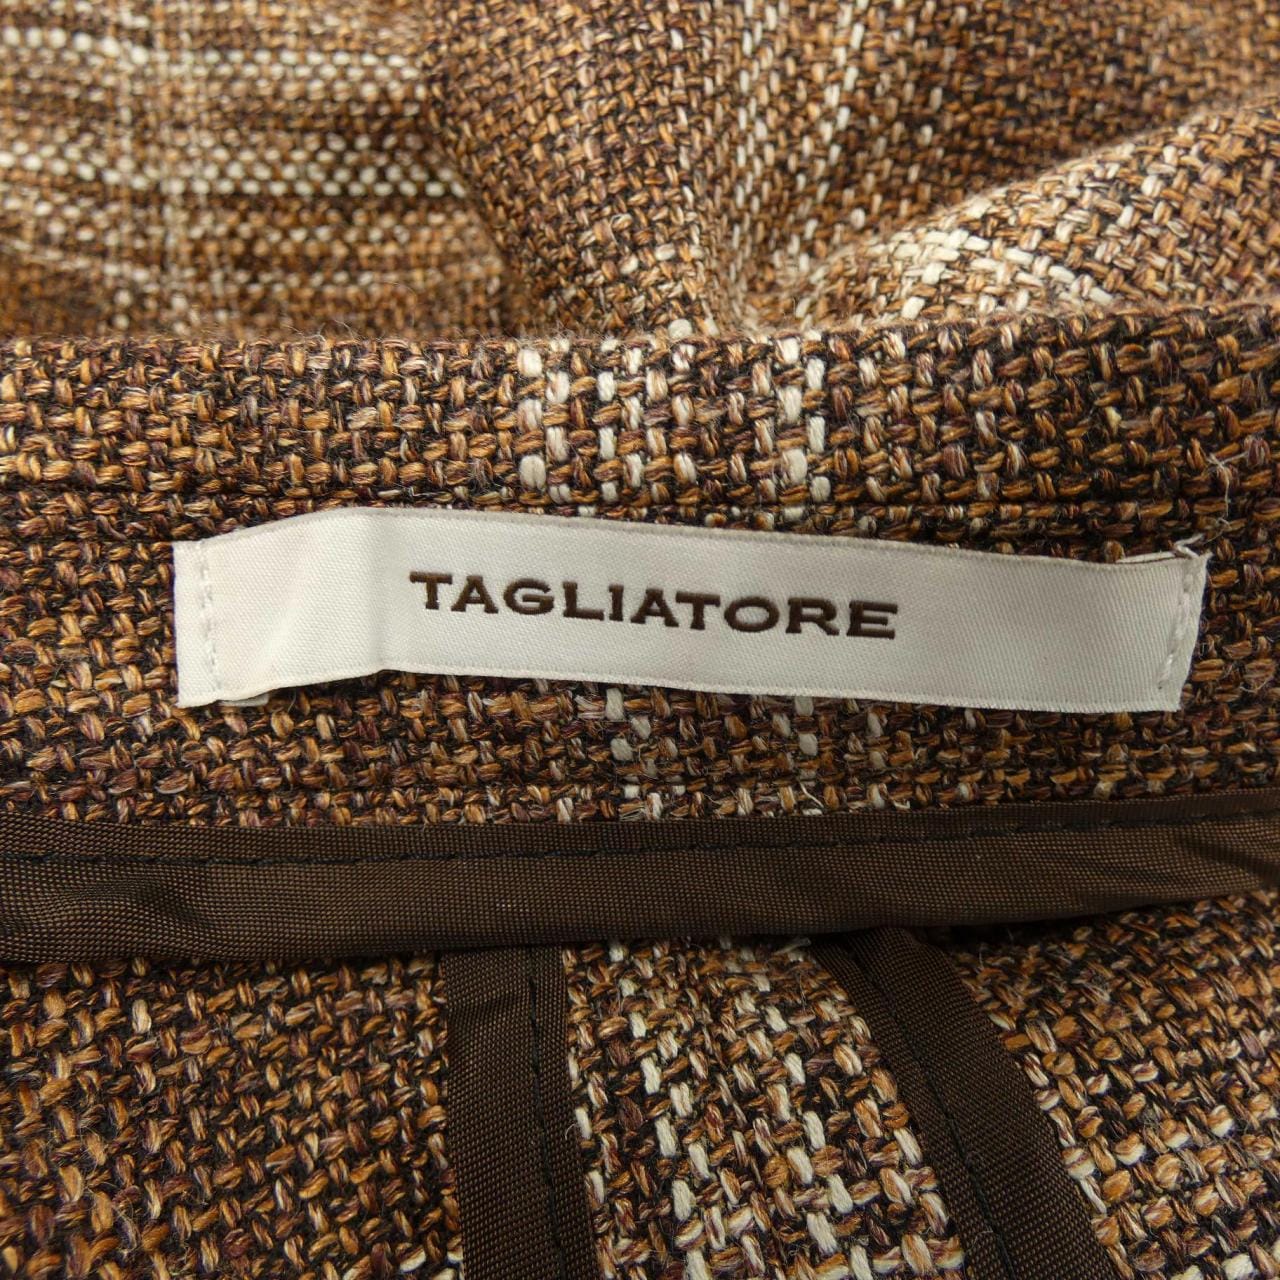 Tagliatore TAGLIATORE jacket